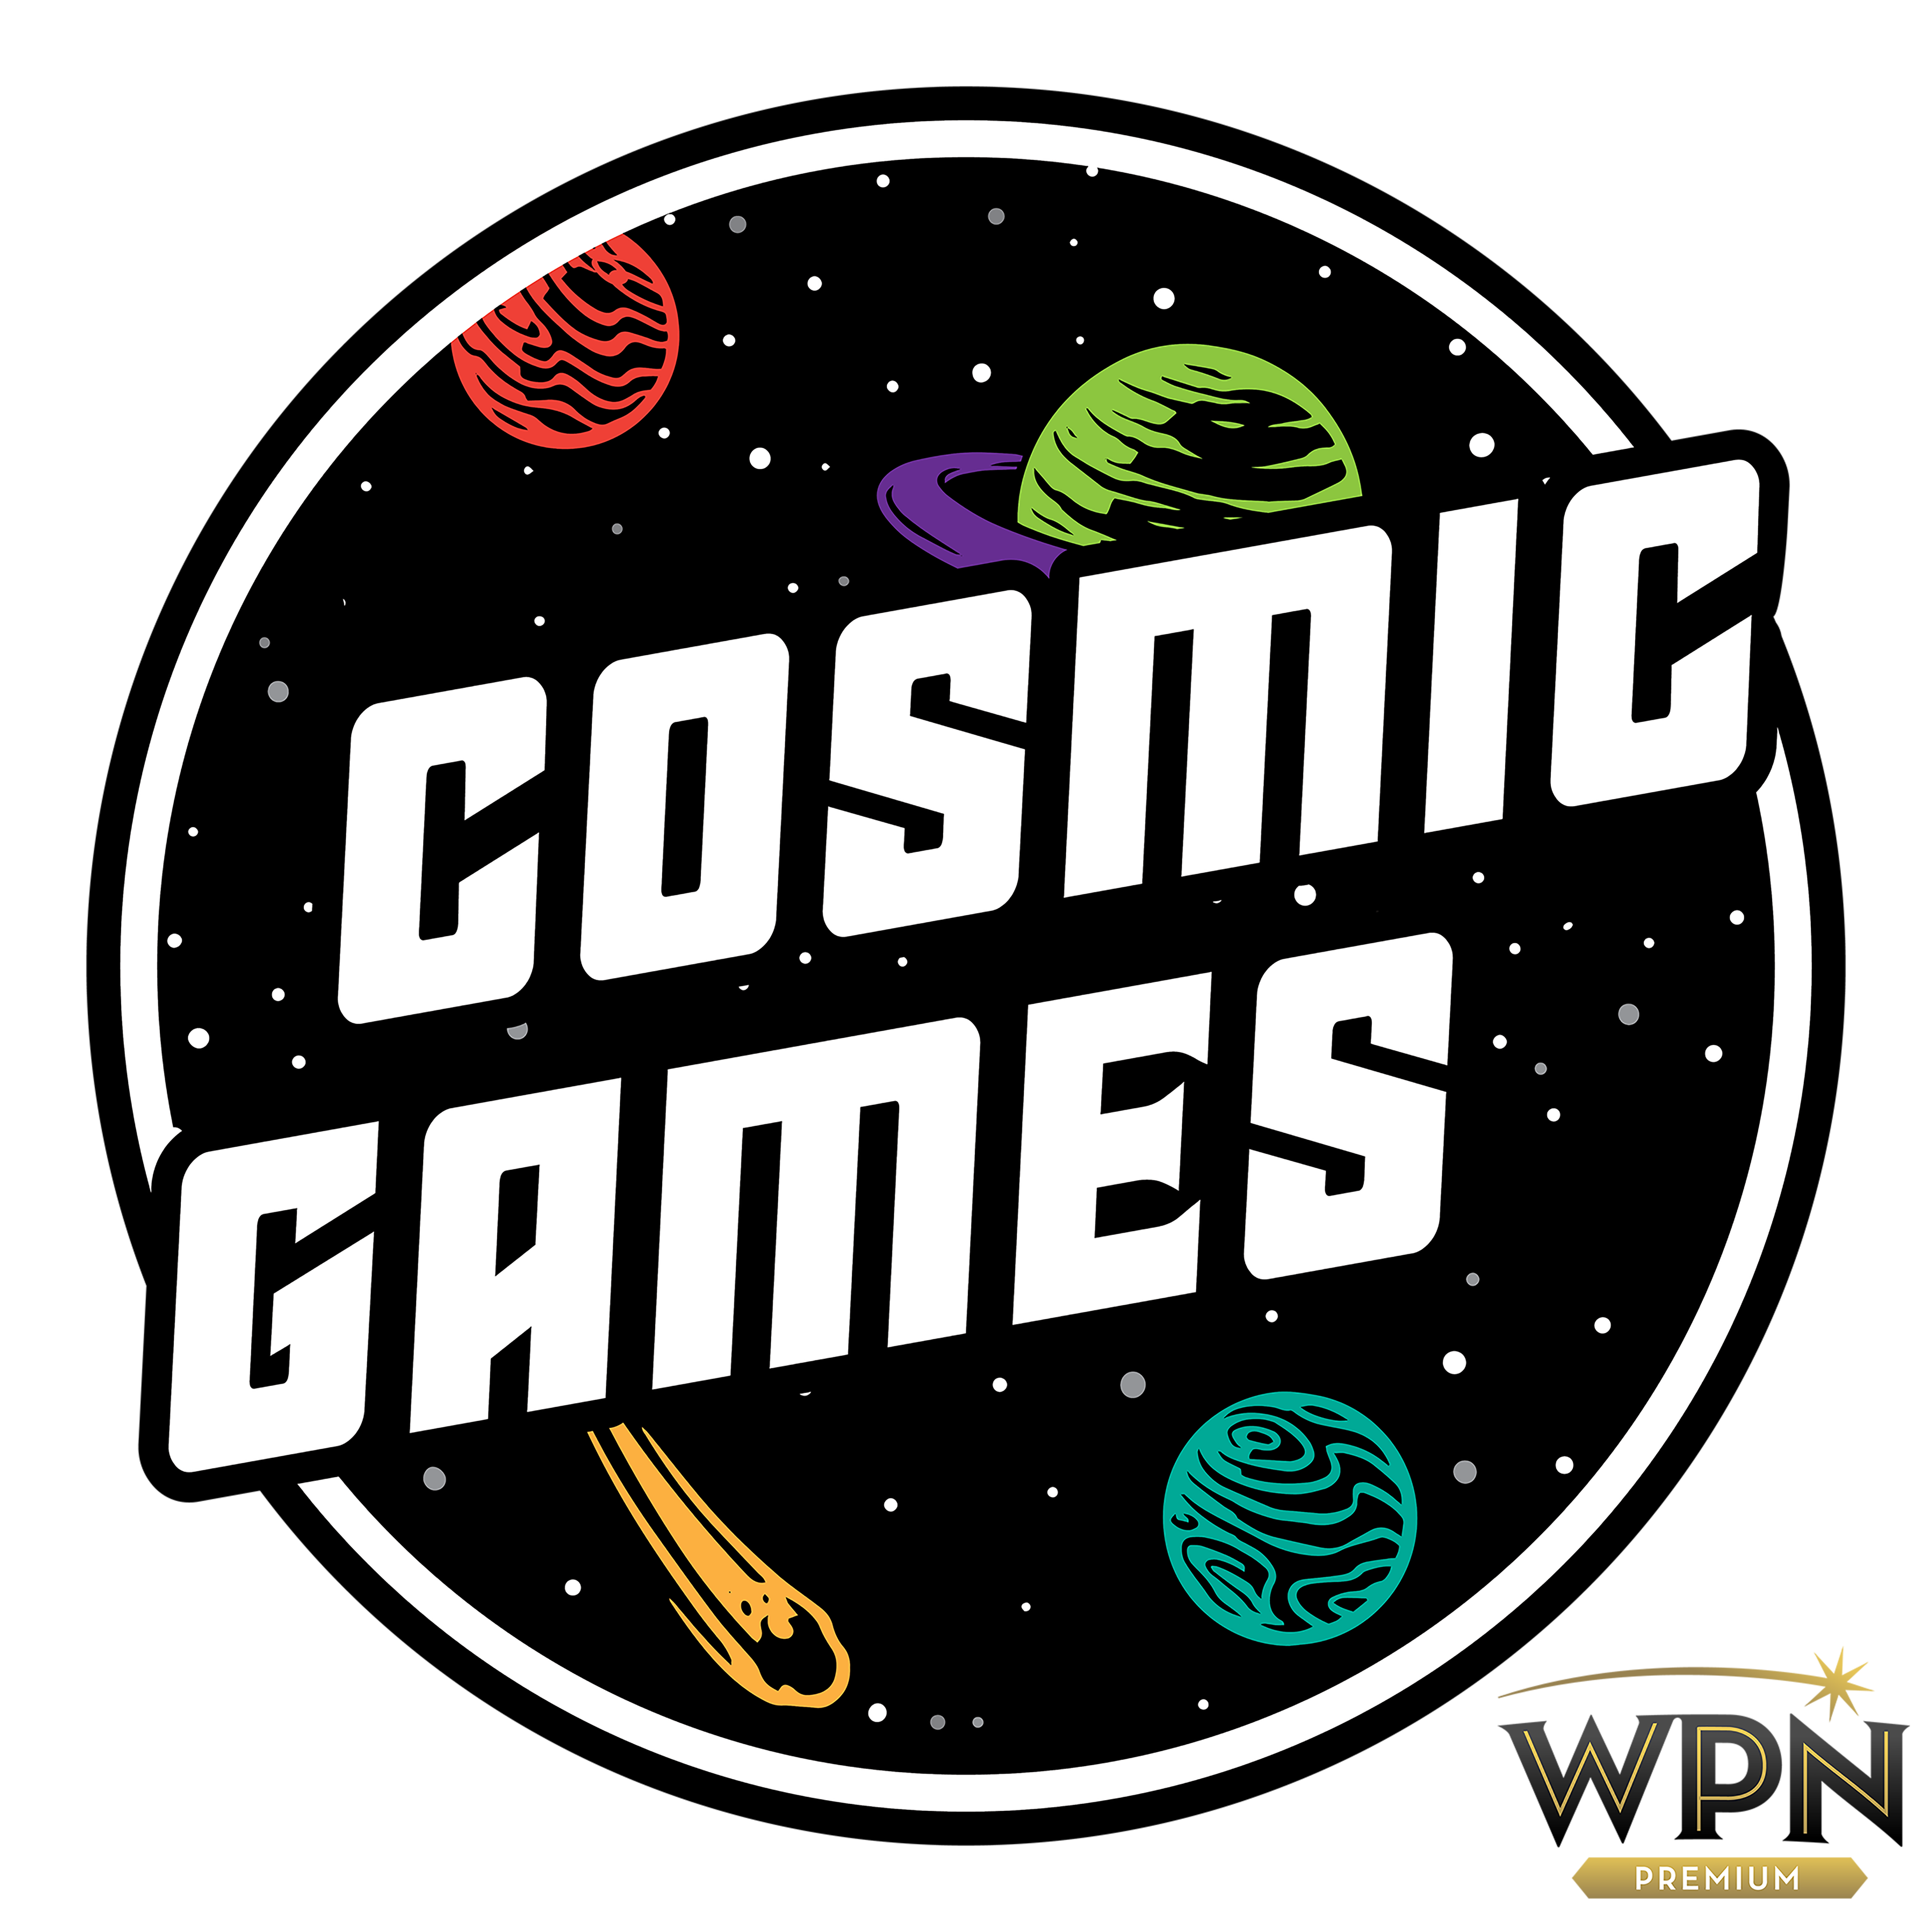 Cosmic Games Logo